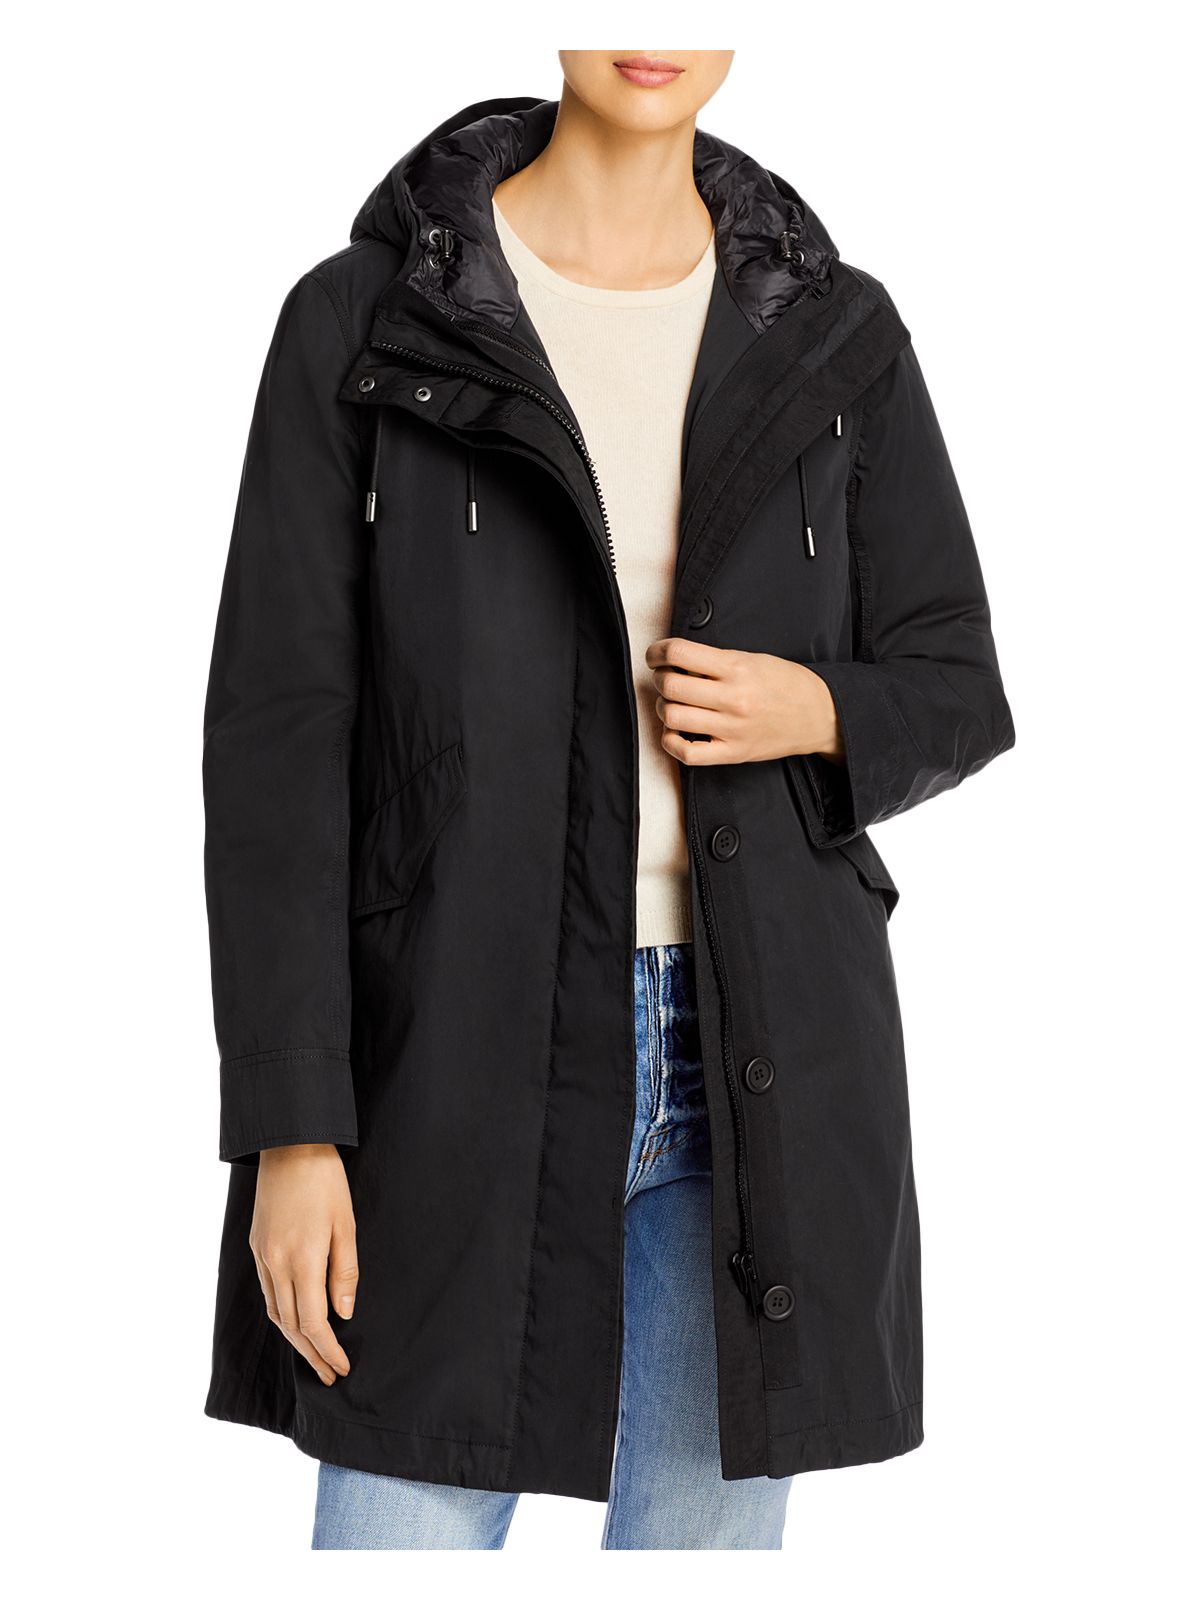 YS ARMY Womens Black Zip Up Winter Jacket Coat 40